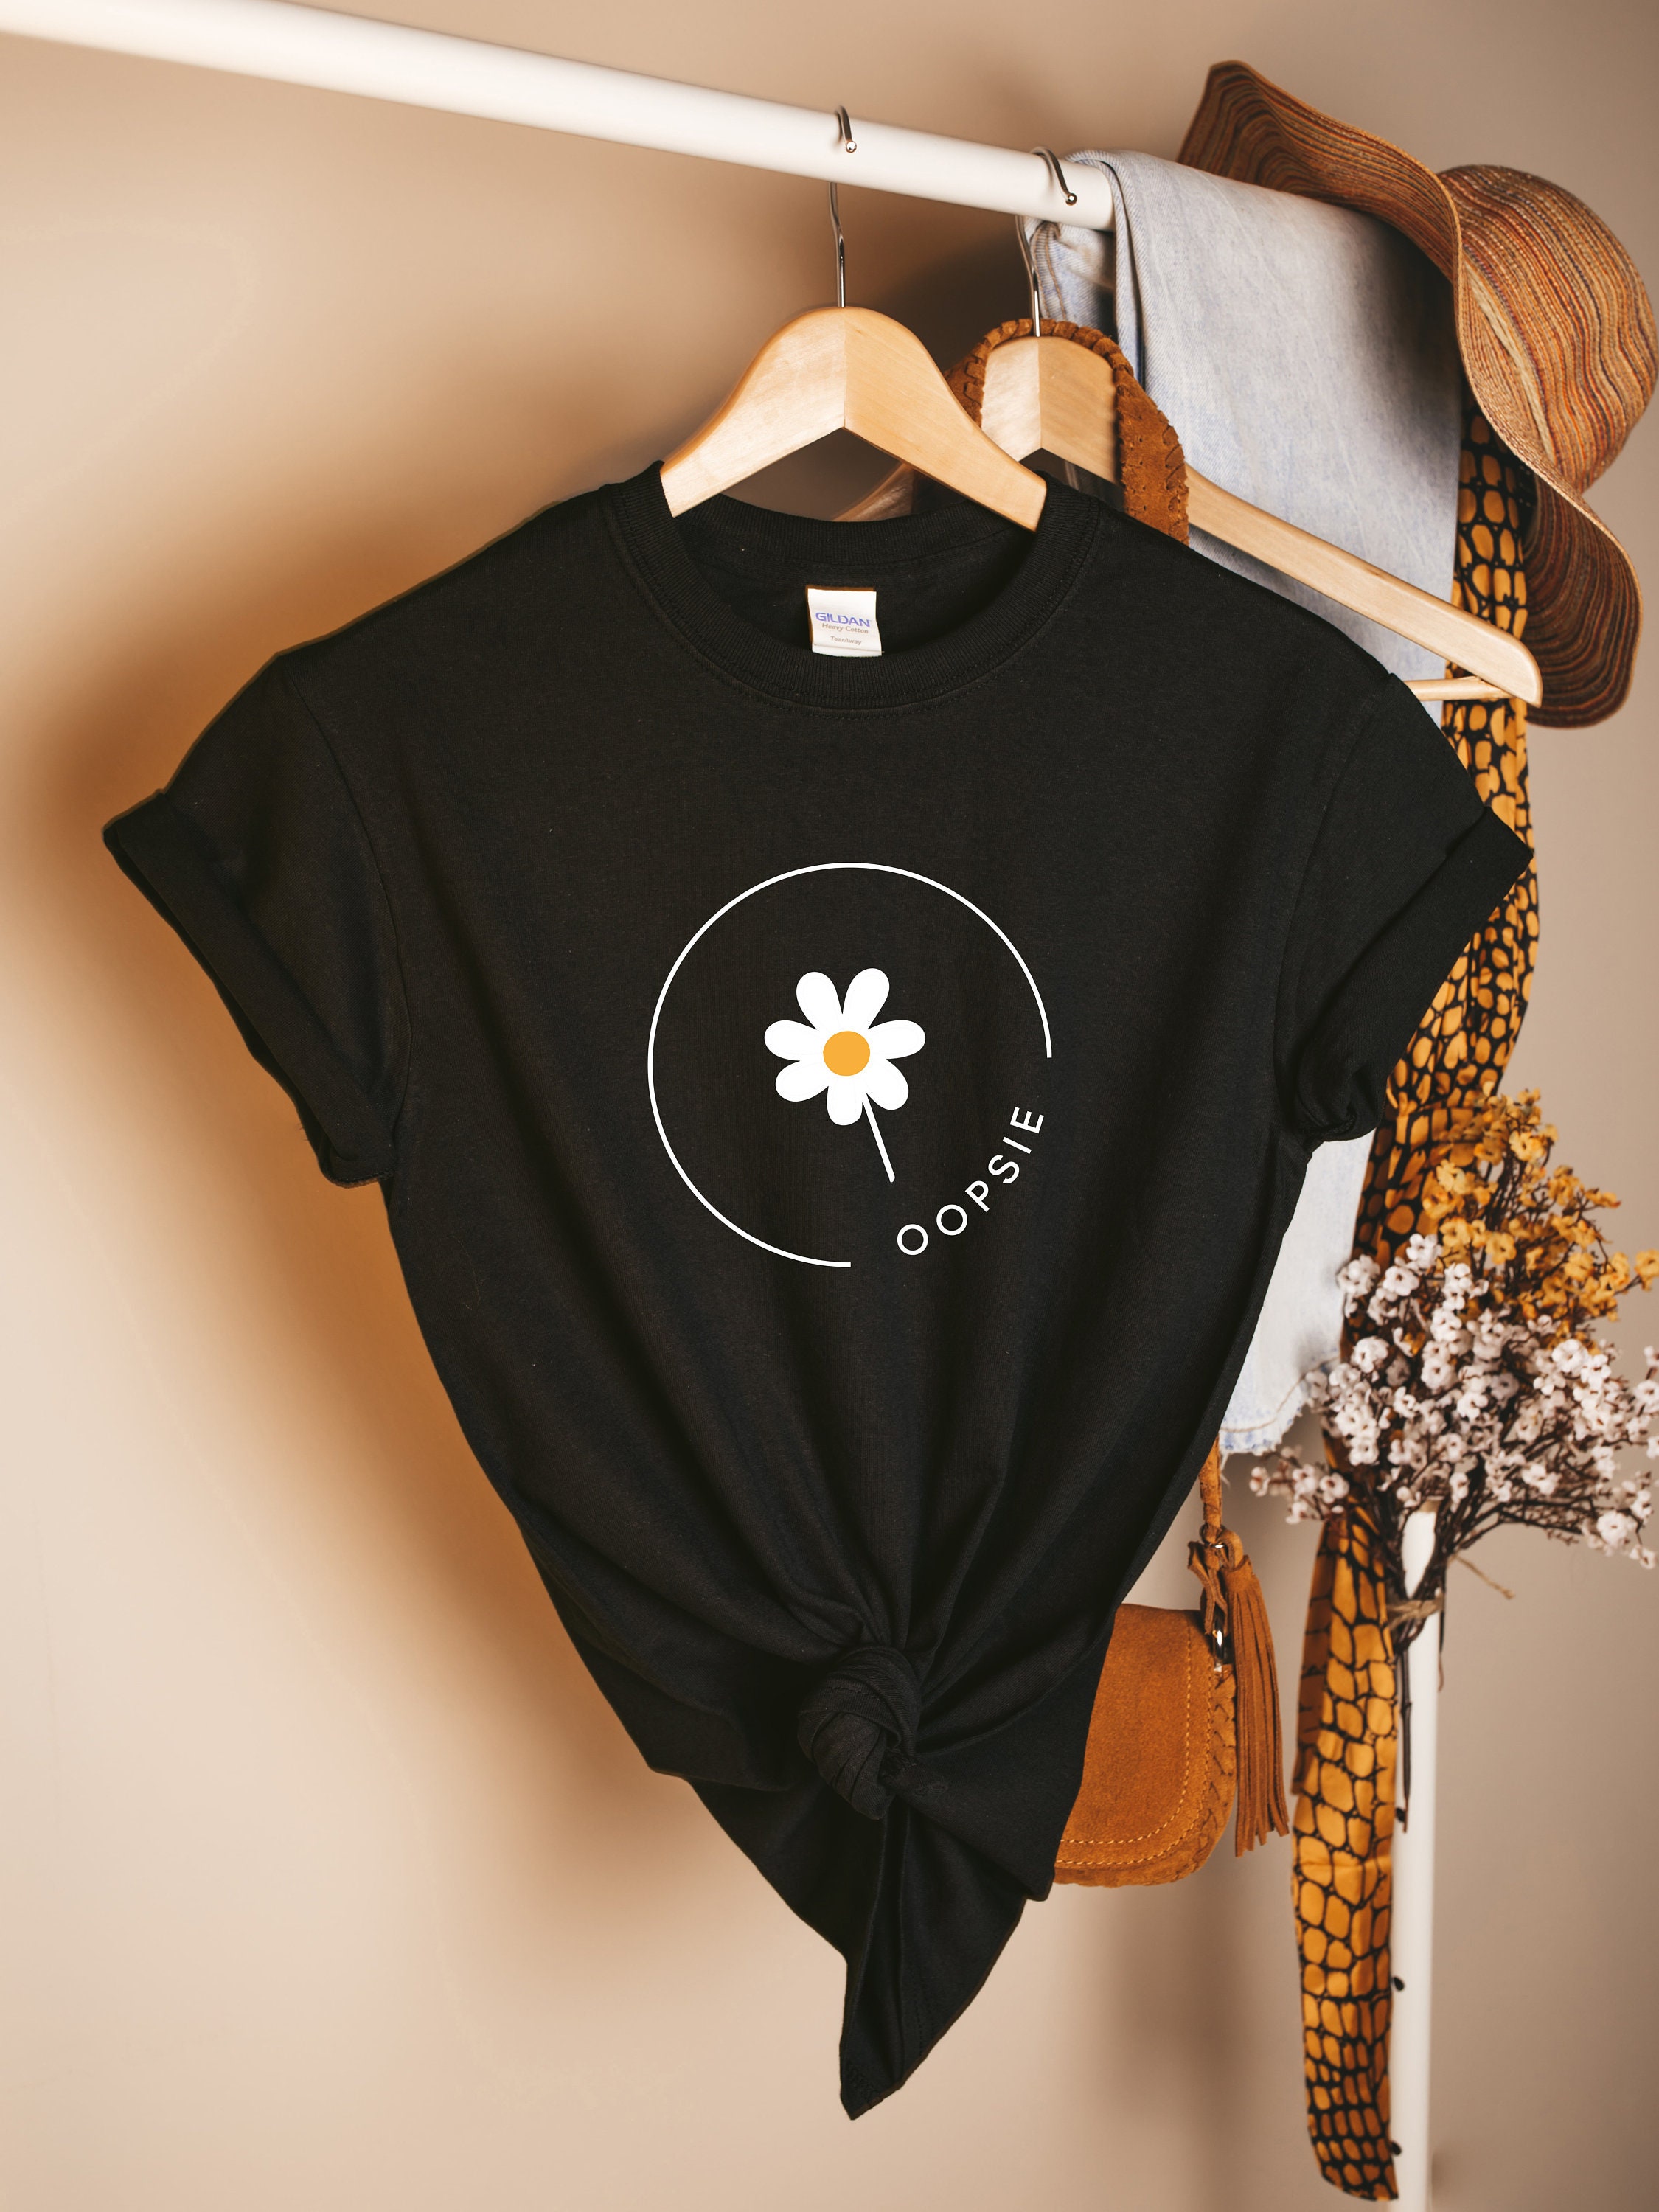 Daisy Puns T-shirt, Funny Crazy Love On A Daisy Flower Shirt